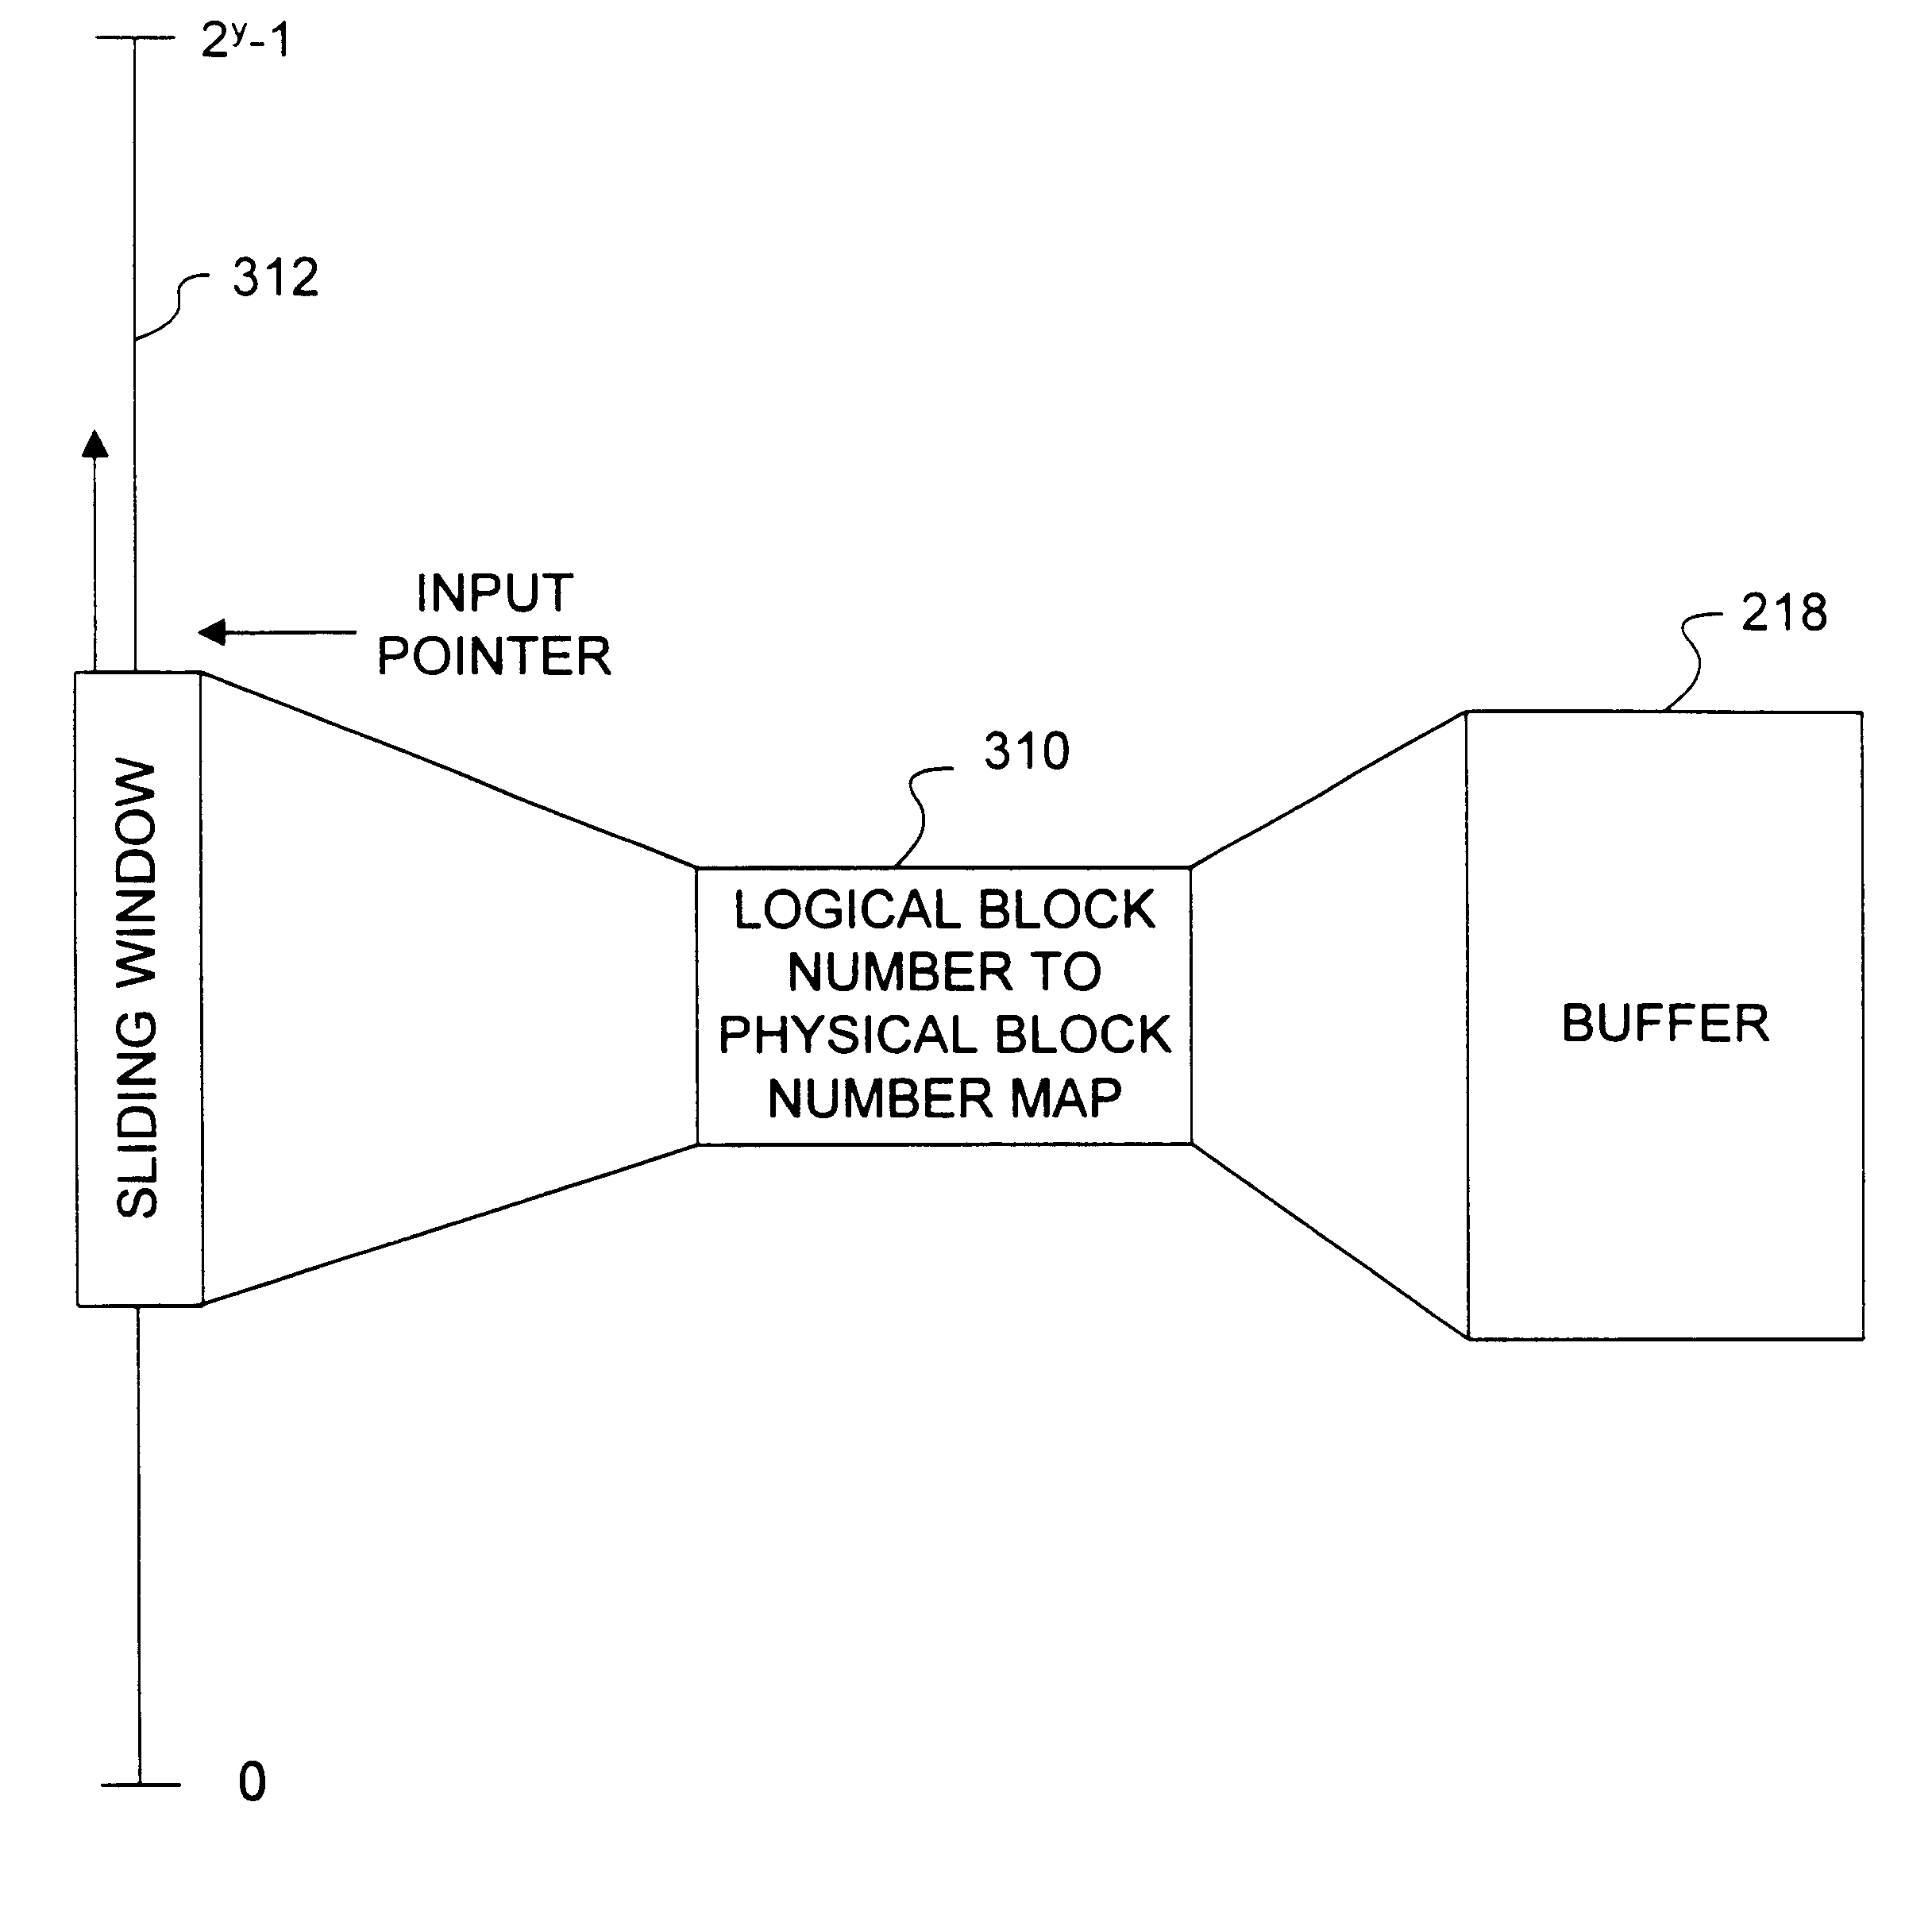 Apparatus and method for providing a cyclic buffer using logical blocks